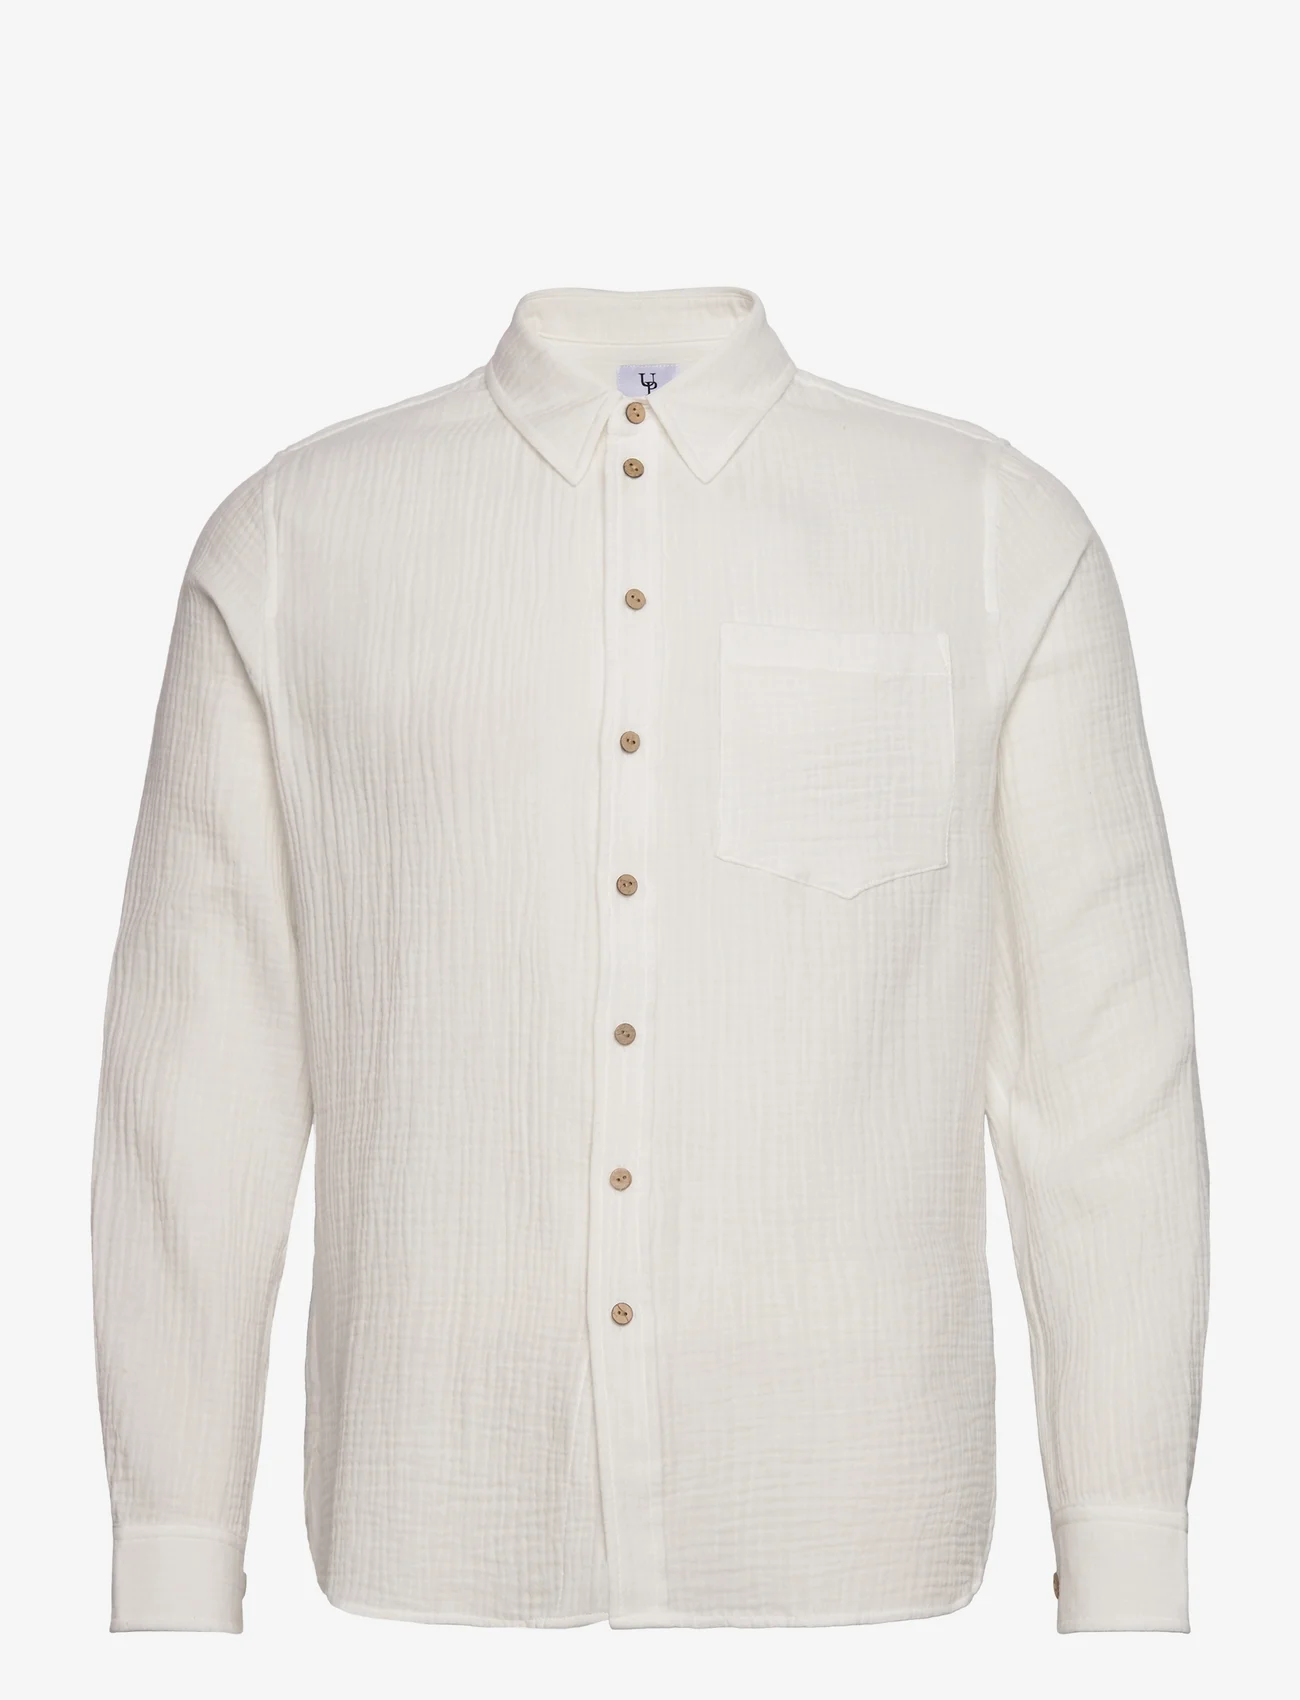 Urban Pioneers - Clive Shirt - basic overhemden - white - 0